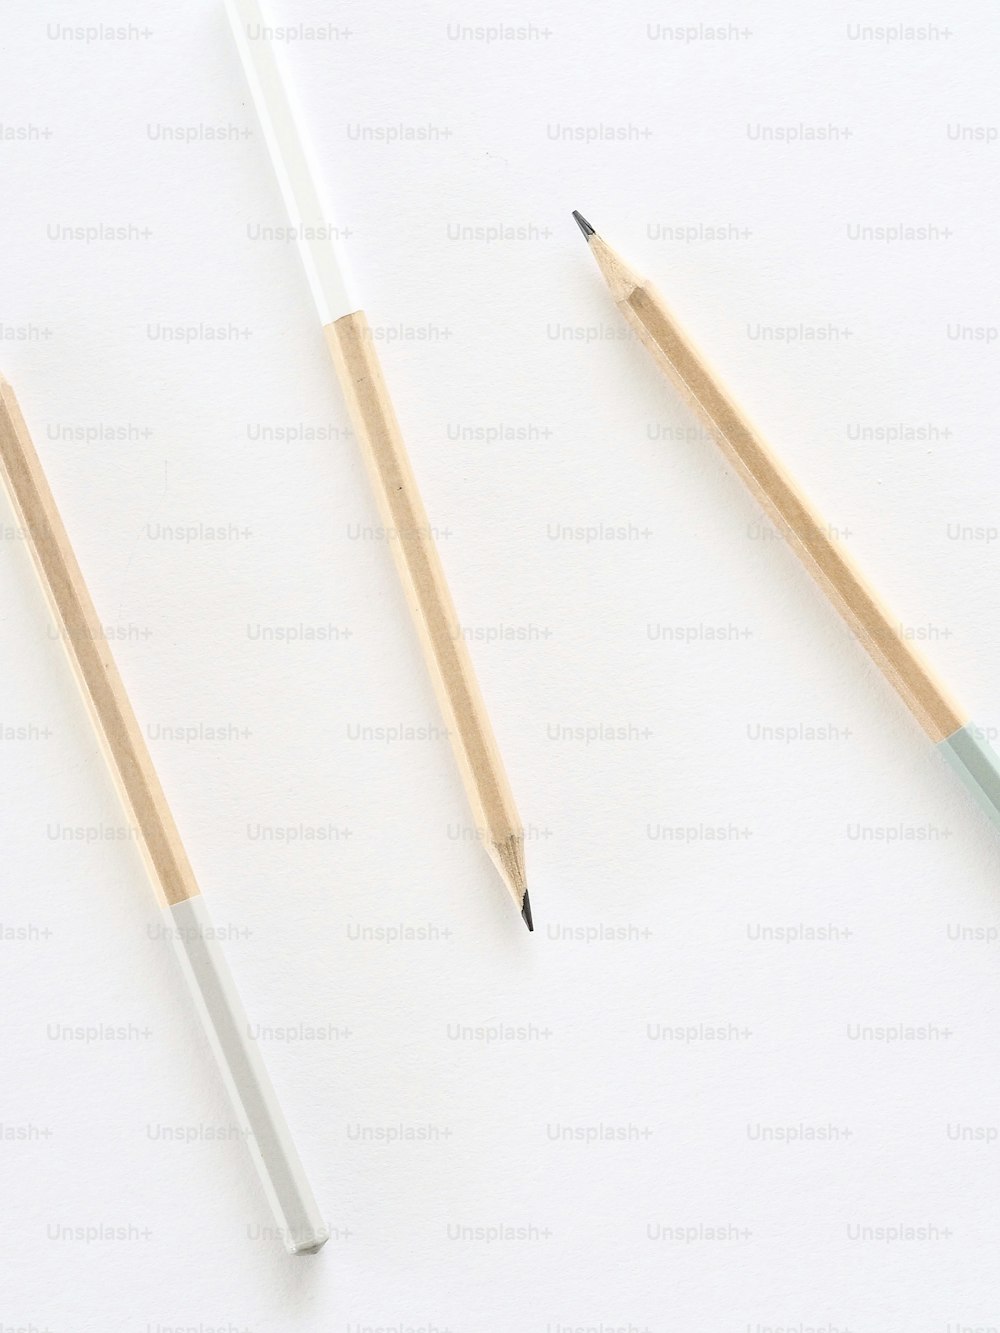 due matite e un temperamatite su una superficie bianca